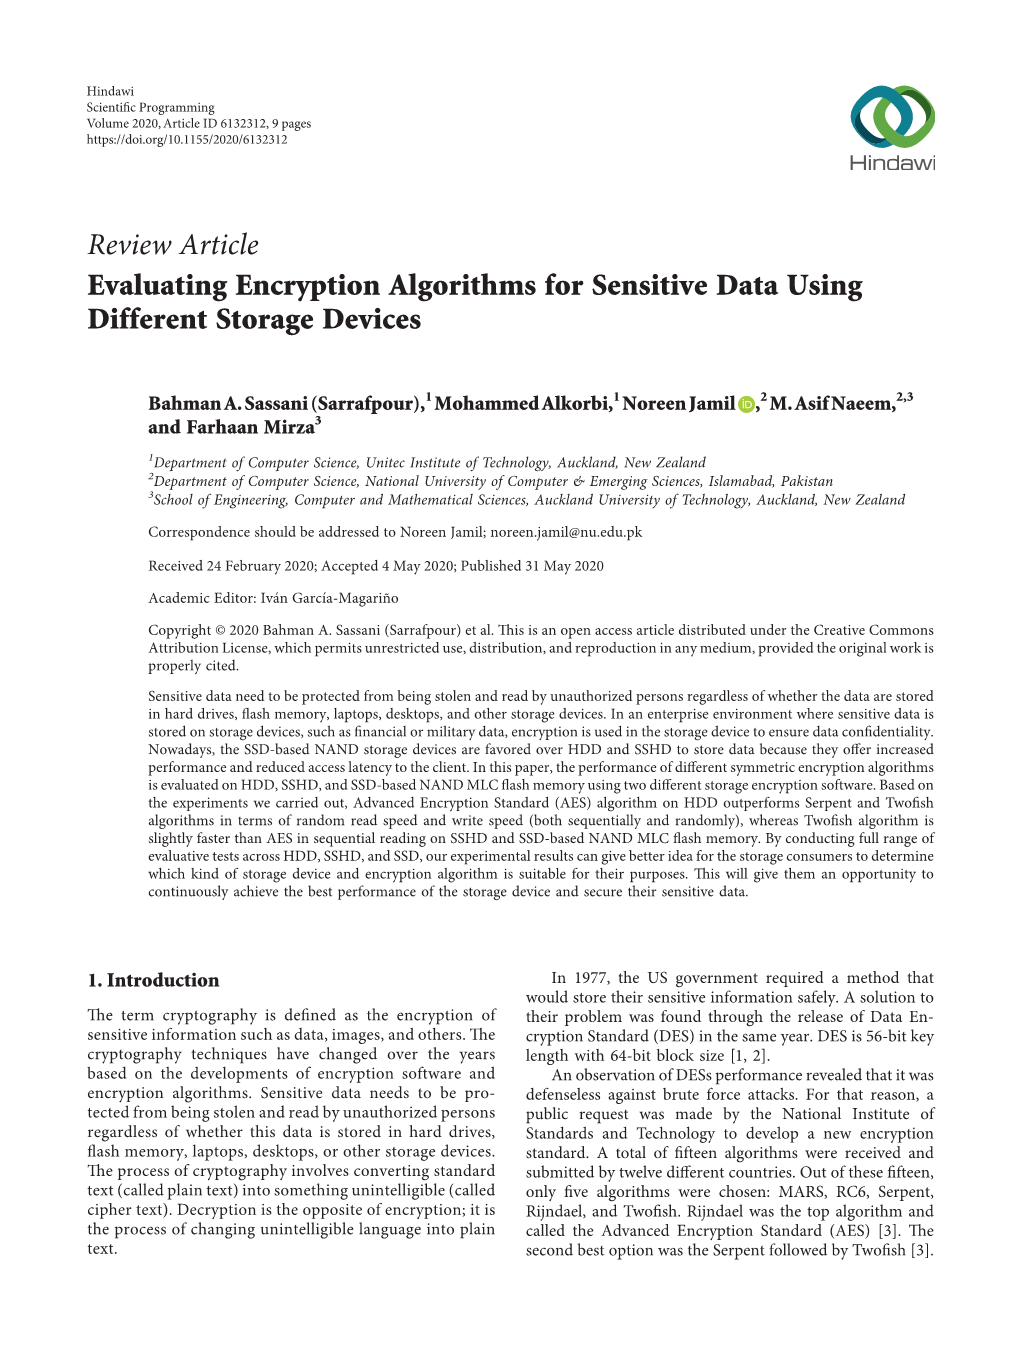 Evaluating Encryption Algorithms for Sensitive Data Using Different Storage Devices